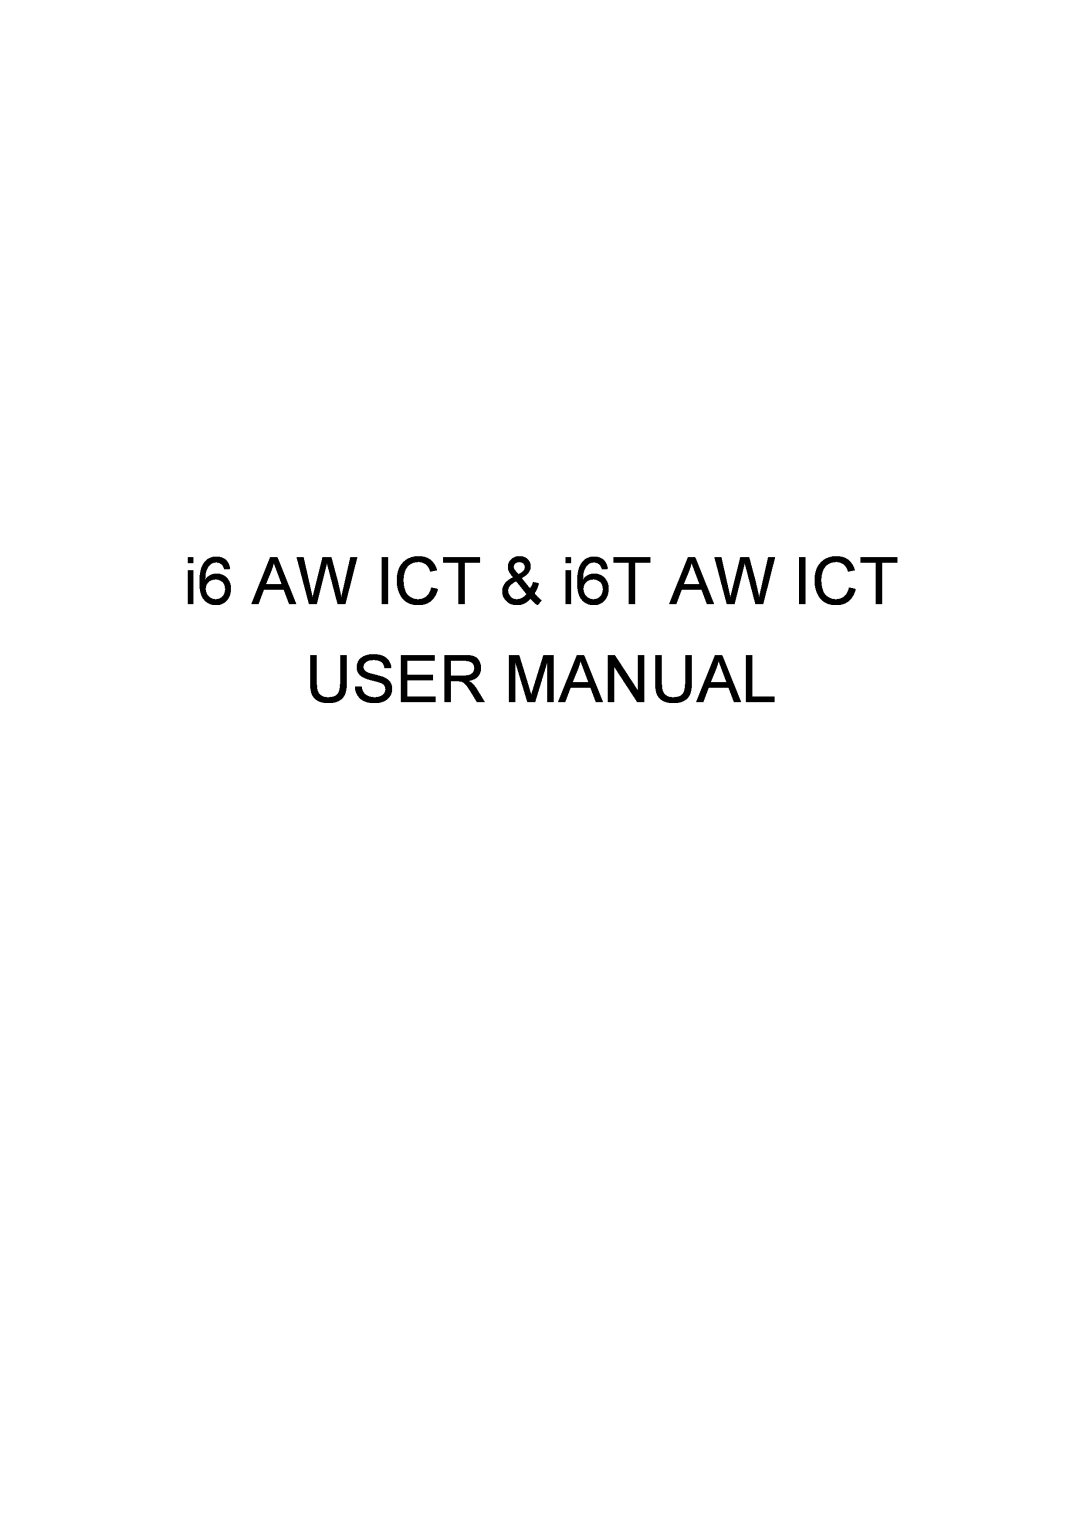 TOA Electronics I6 AW ICT user manual i6 AW ICT & i6T AW ICT 